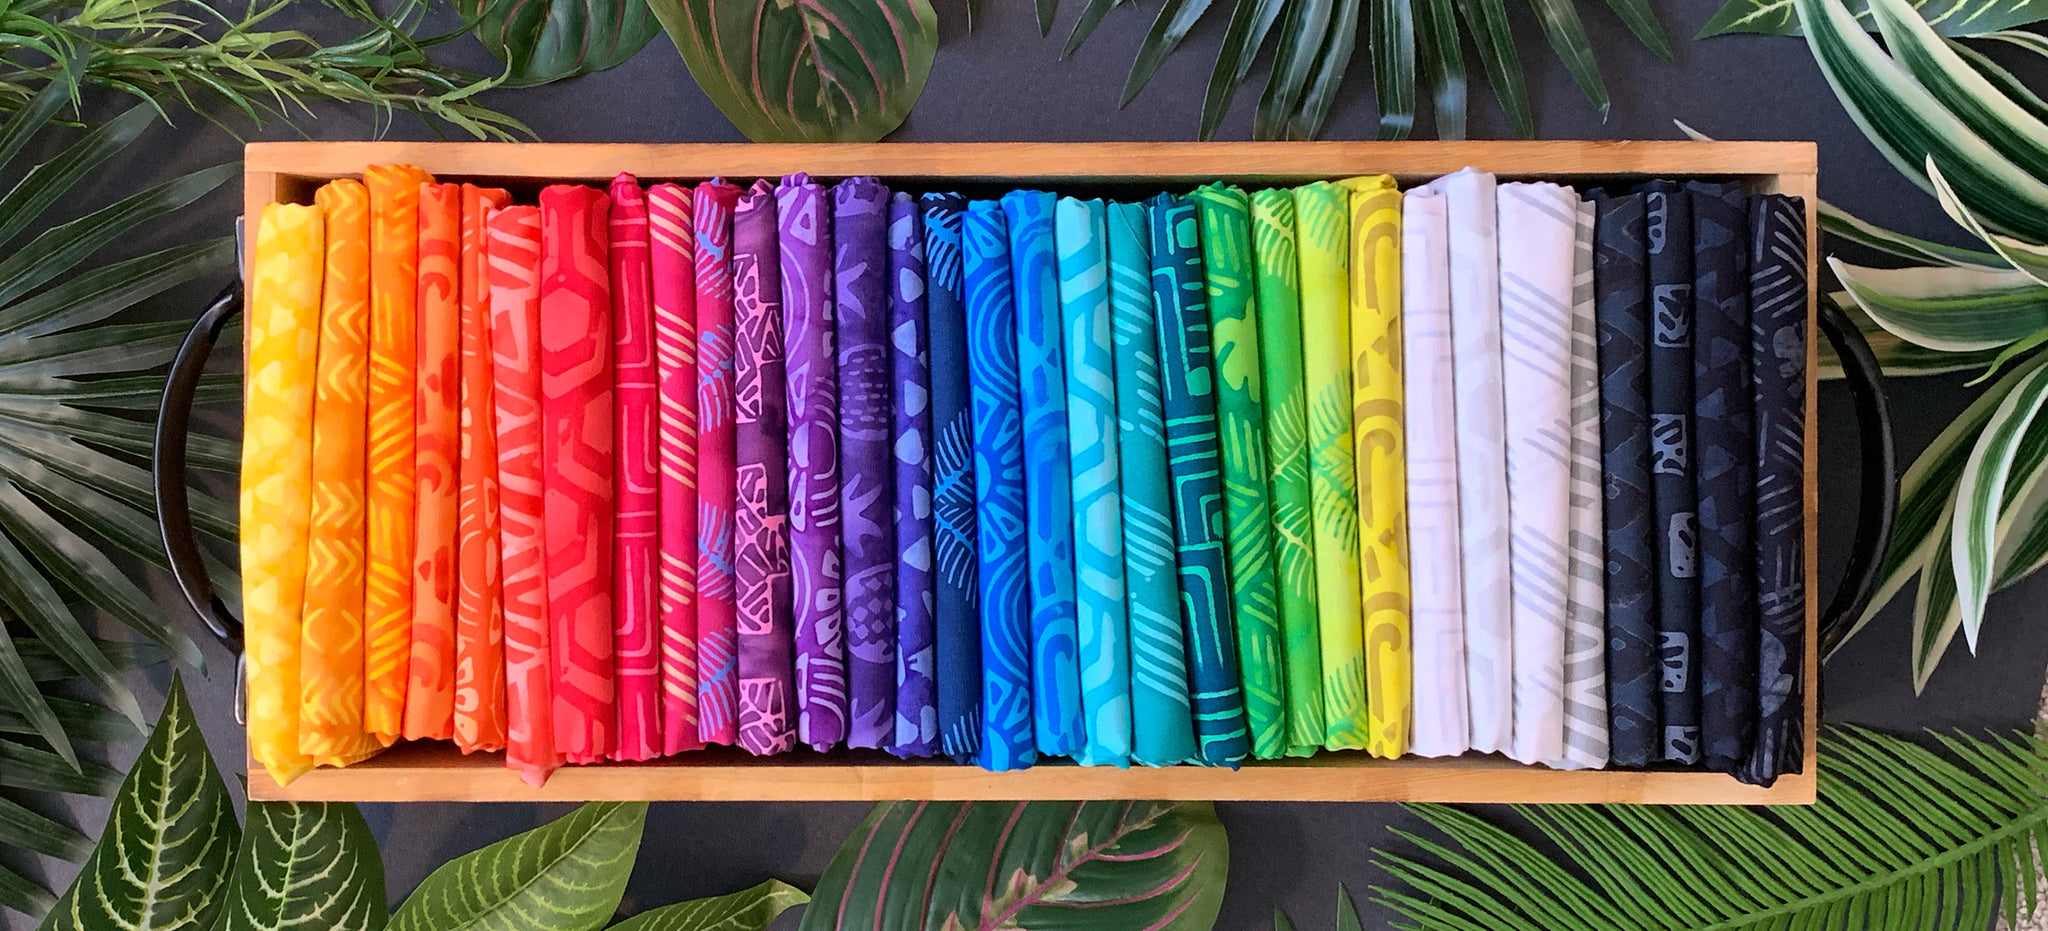 Introducing my Batik Fabric Line - Pura Vida! 🌿